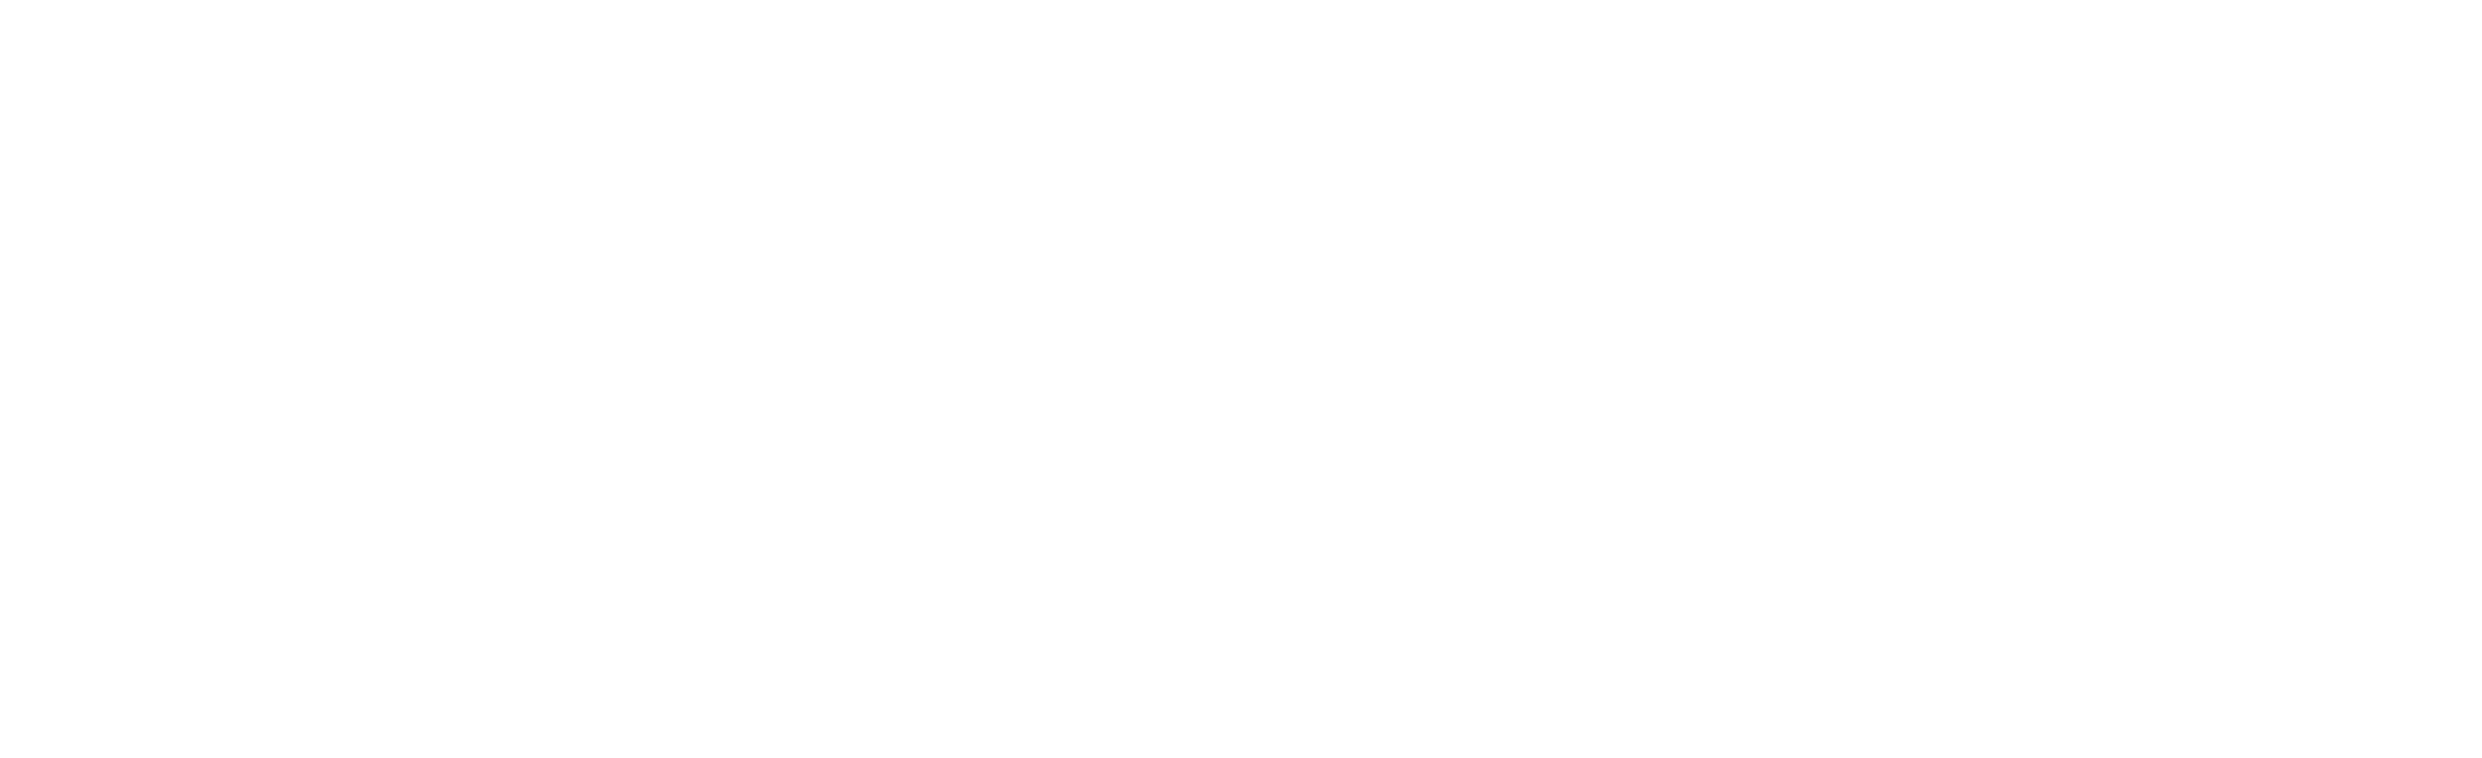 Thrive white logo